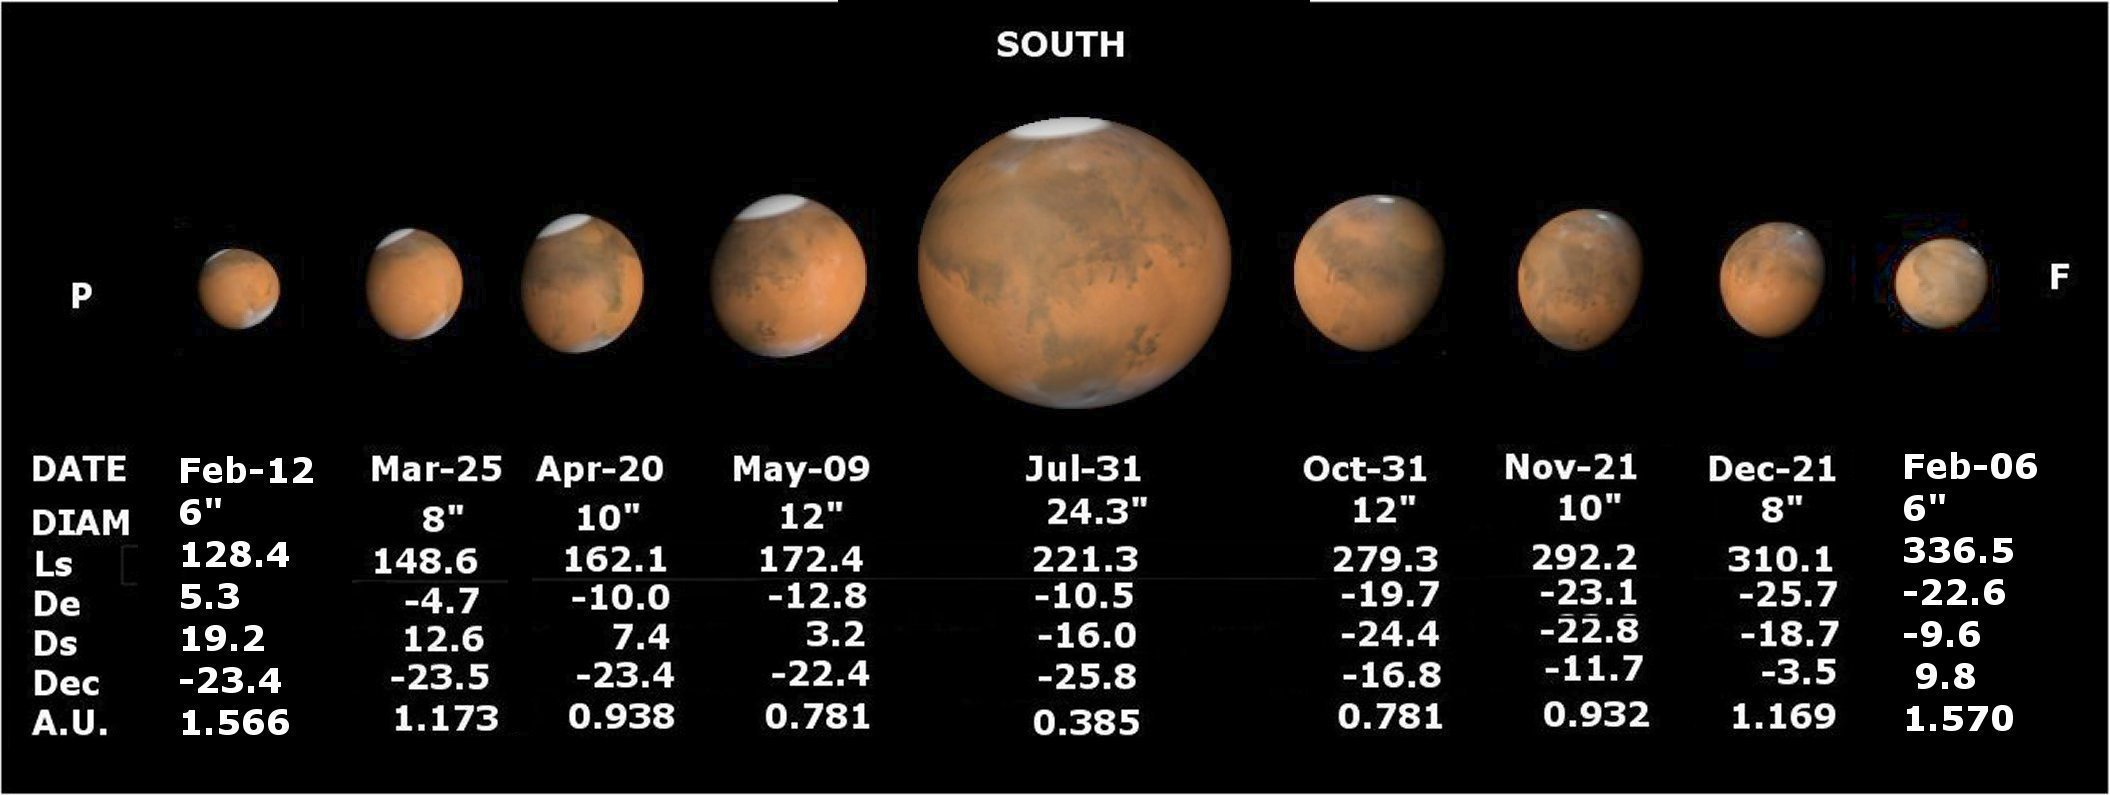 Mars Opposition 2018 - Size Comparison Feb 18 - Feb 19